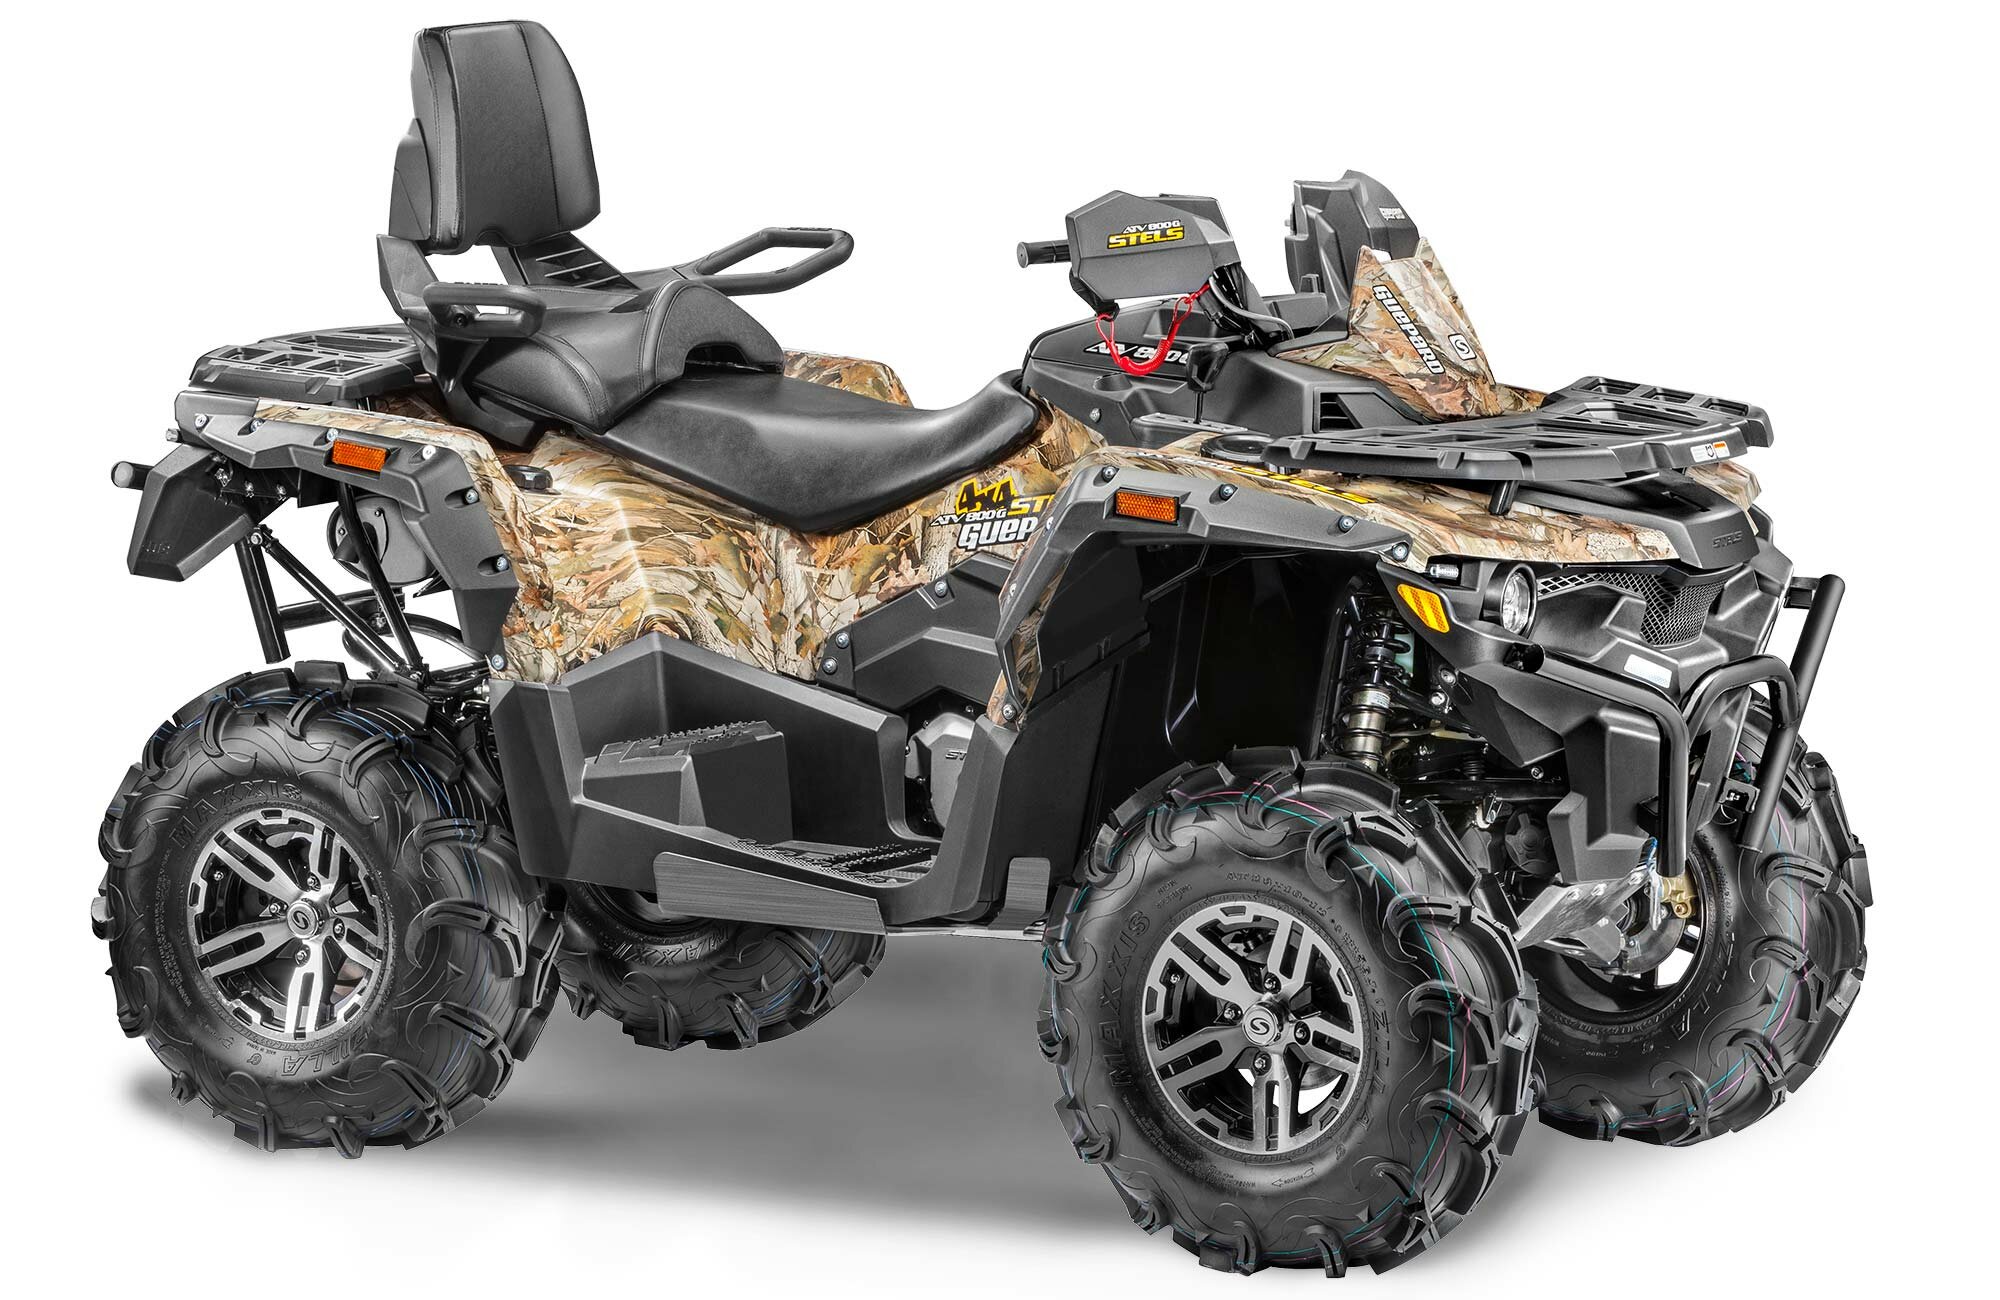 Квадроцикл Stels ATV 650 Guepard Trophy EPS Камуфляж - Раздел: Автотовары, мототовары